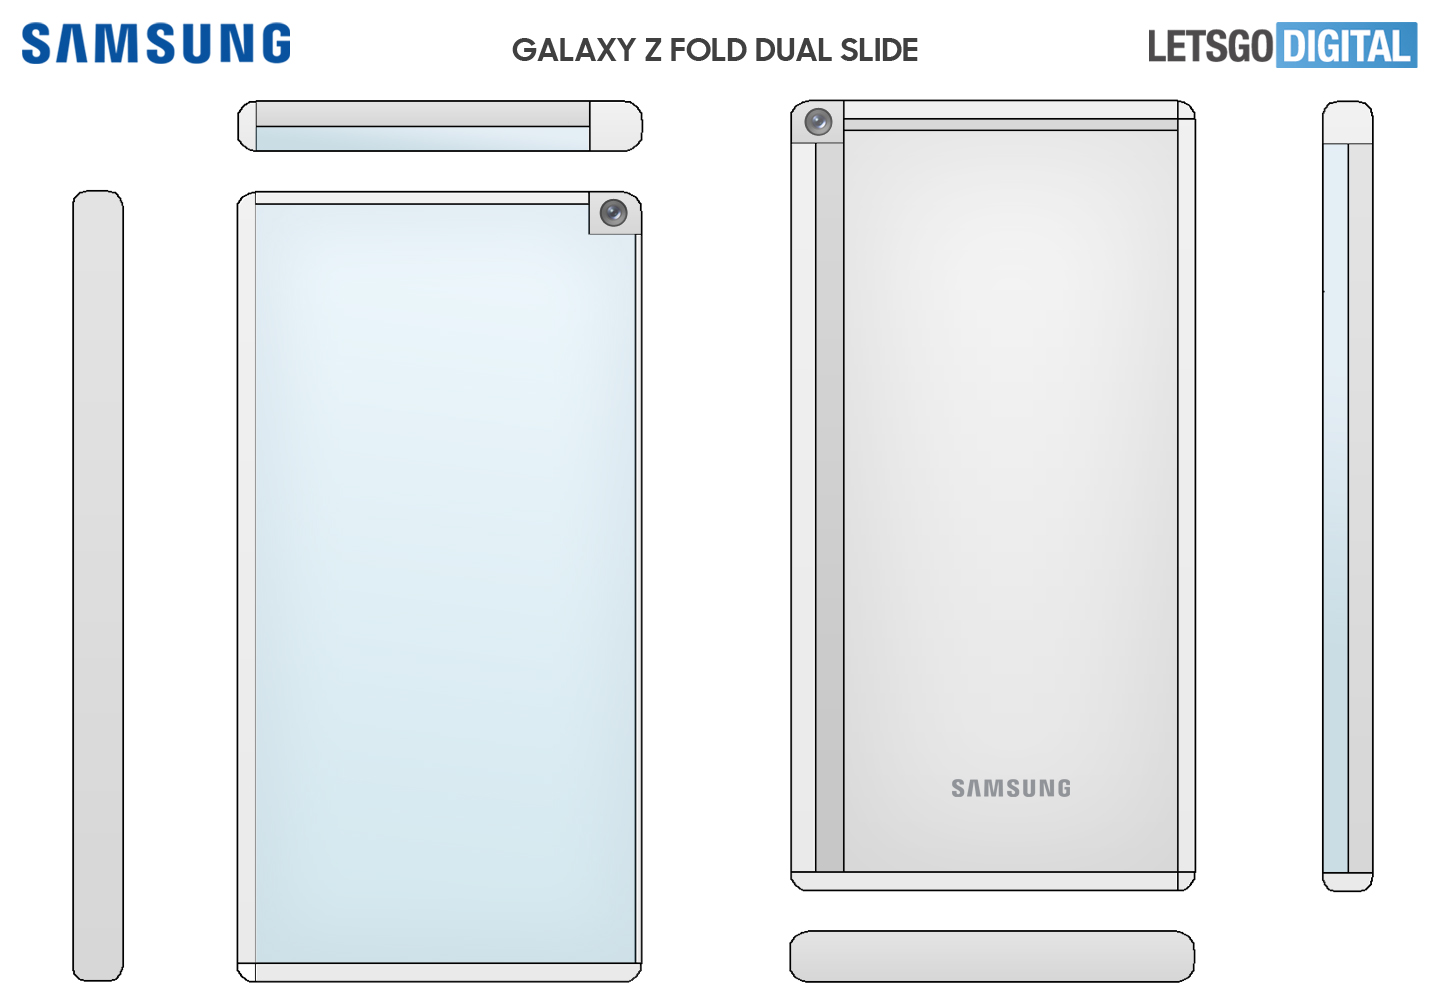 Samsung Dual Slide smartphone